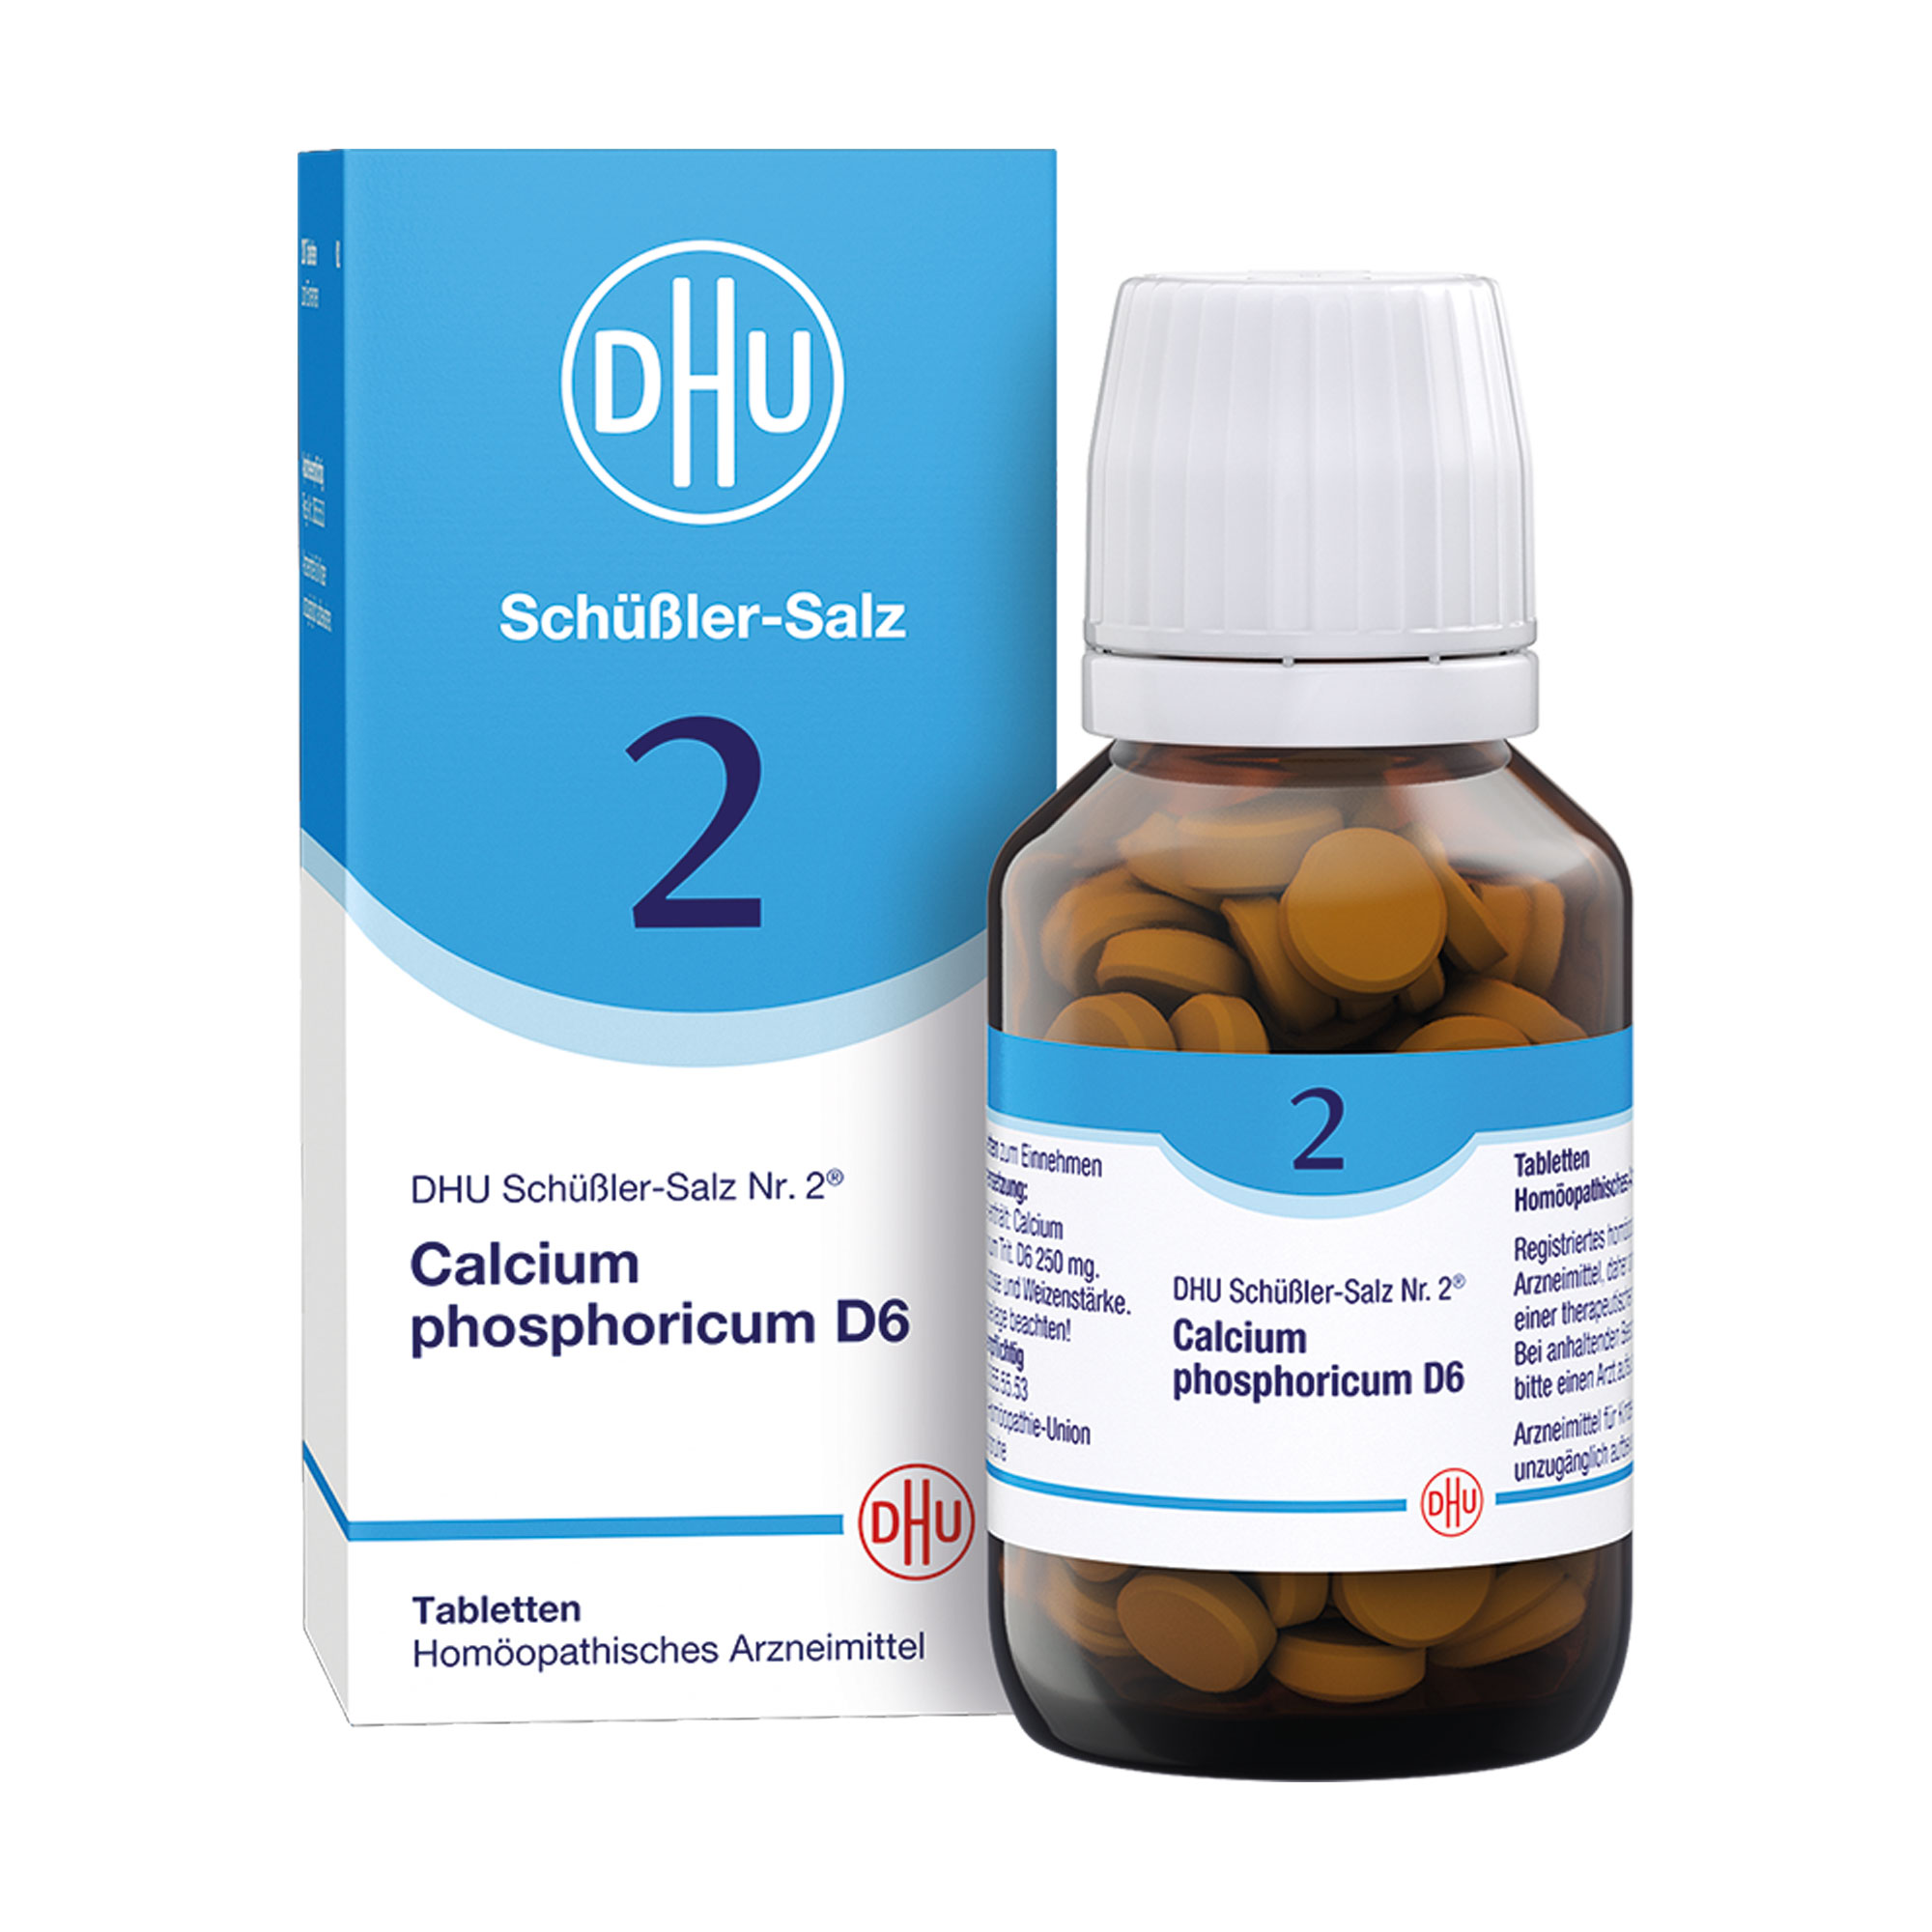 Homöopathisches Arzneimittel mit Calcium phosphoricum Trit. D6.